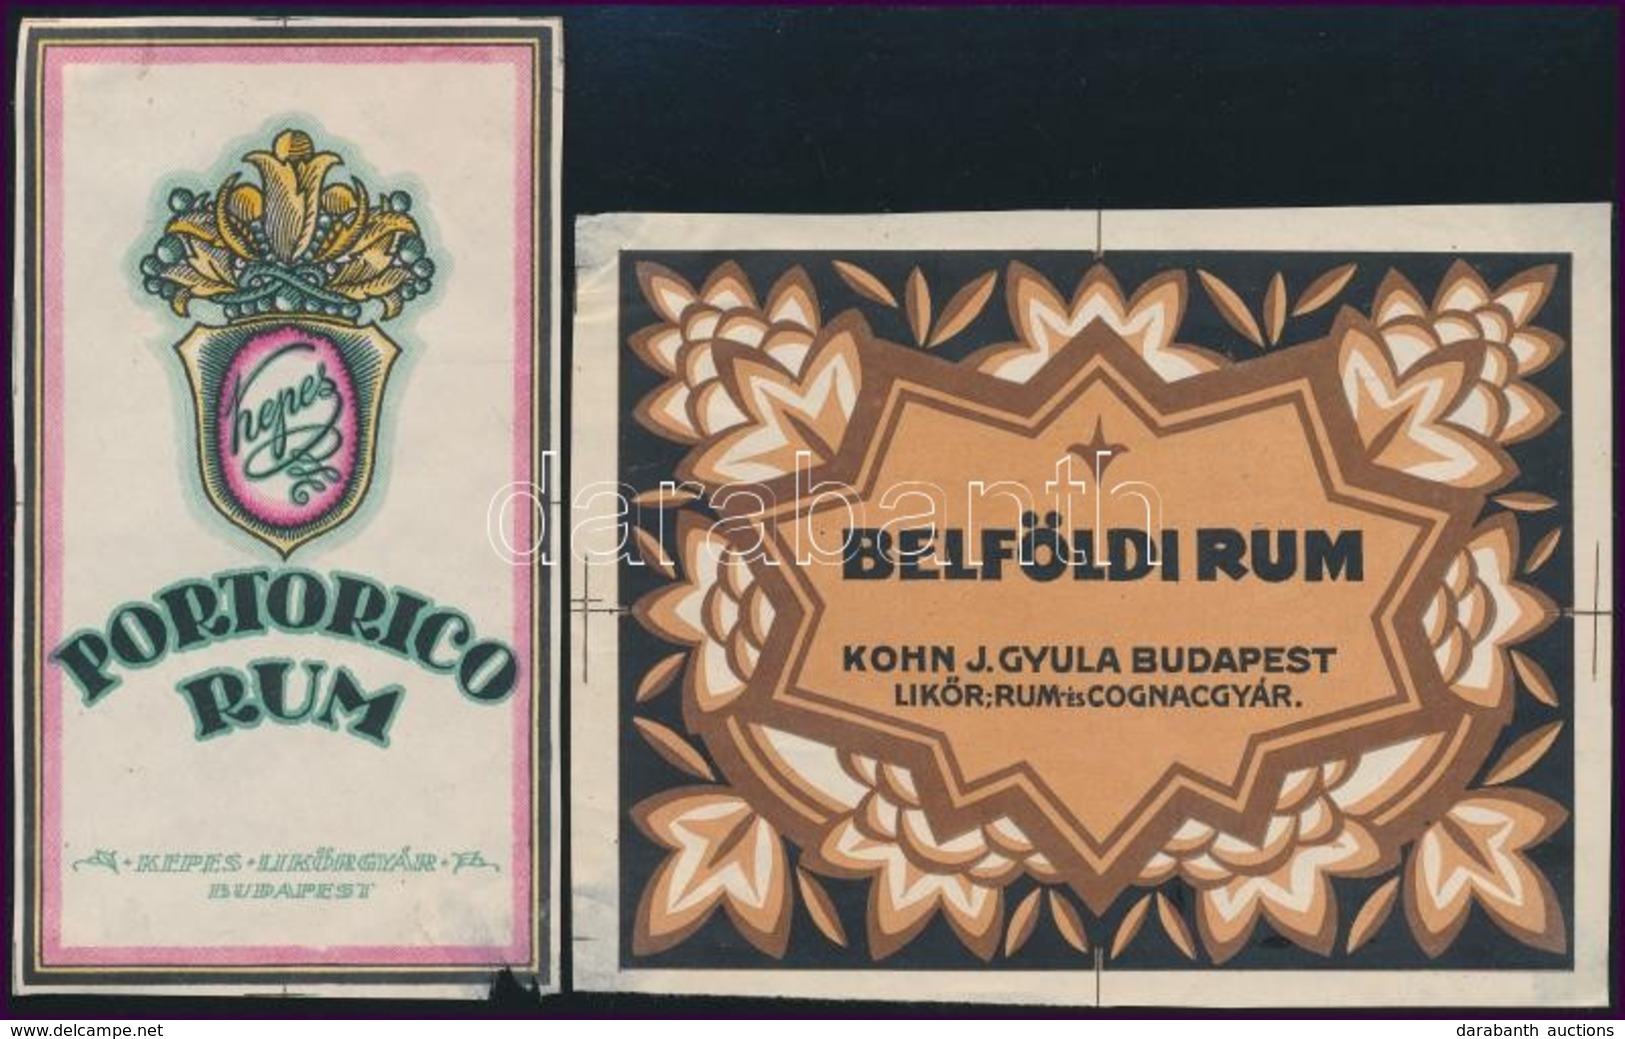 Belföldi Rum és Portorico Rum Italcímke, 2 Db - Publicidad